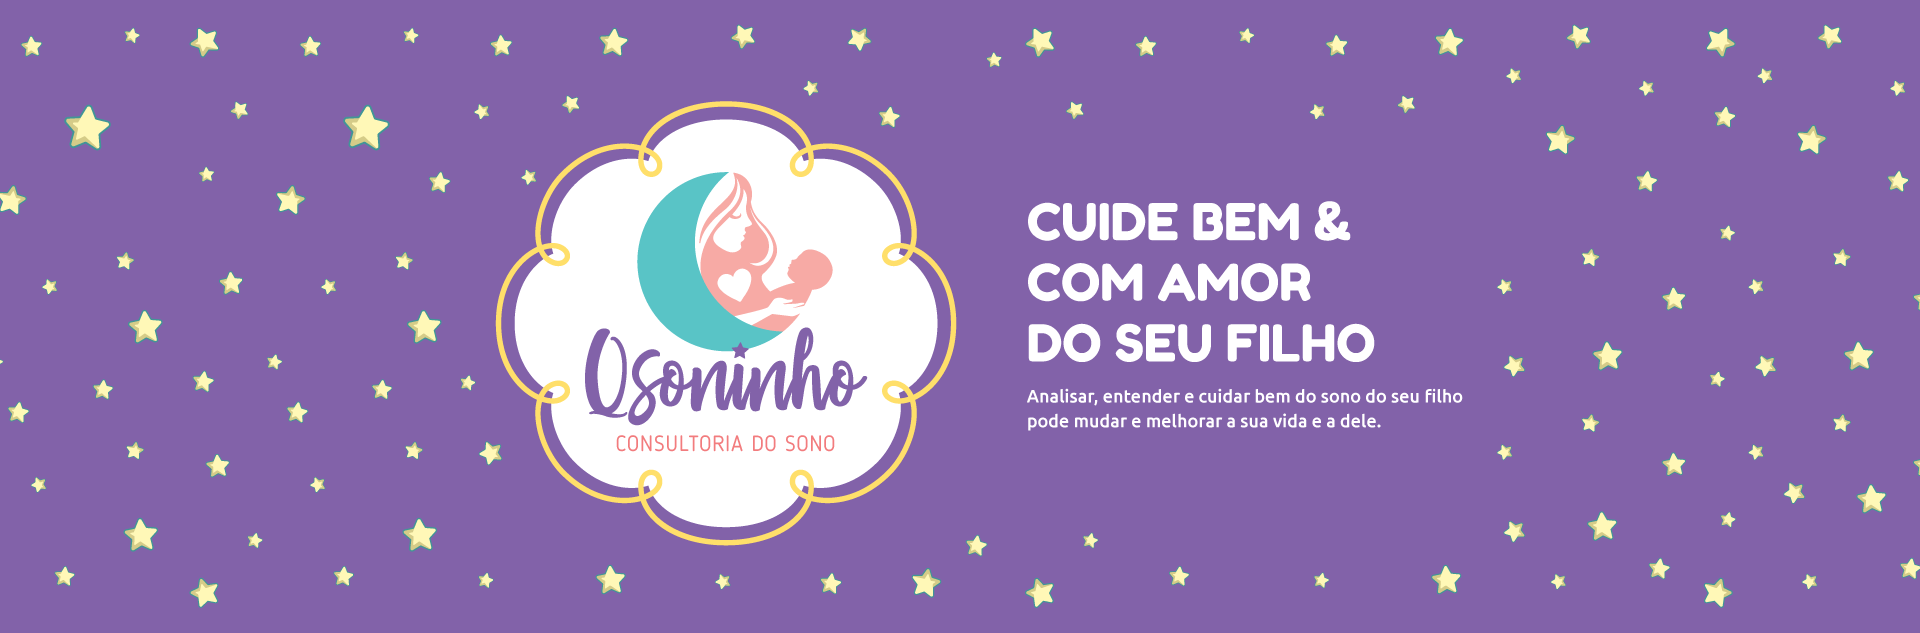 qsoninho-consultoria-do-sono-materno-infantil-banner-01